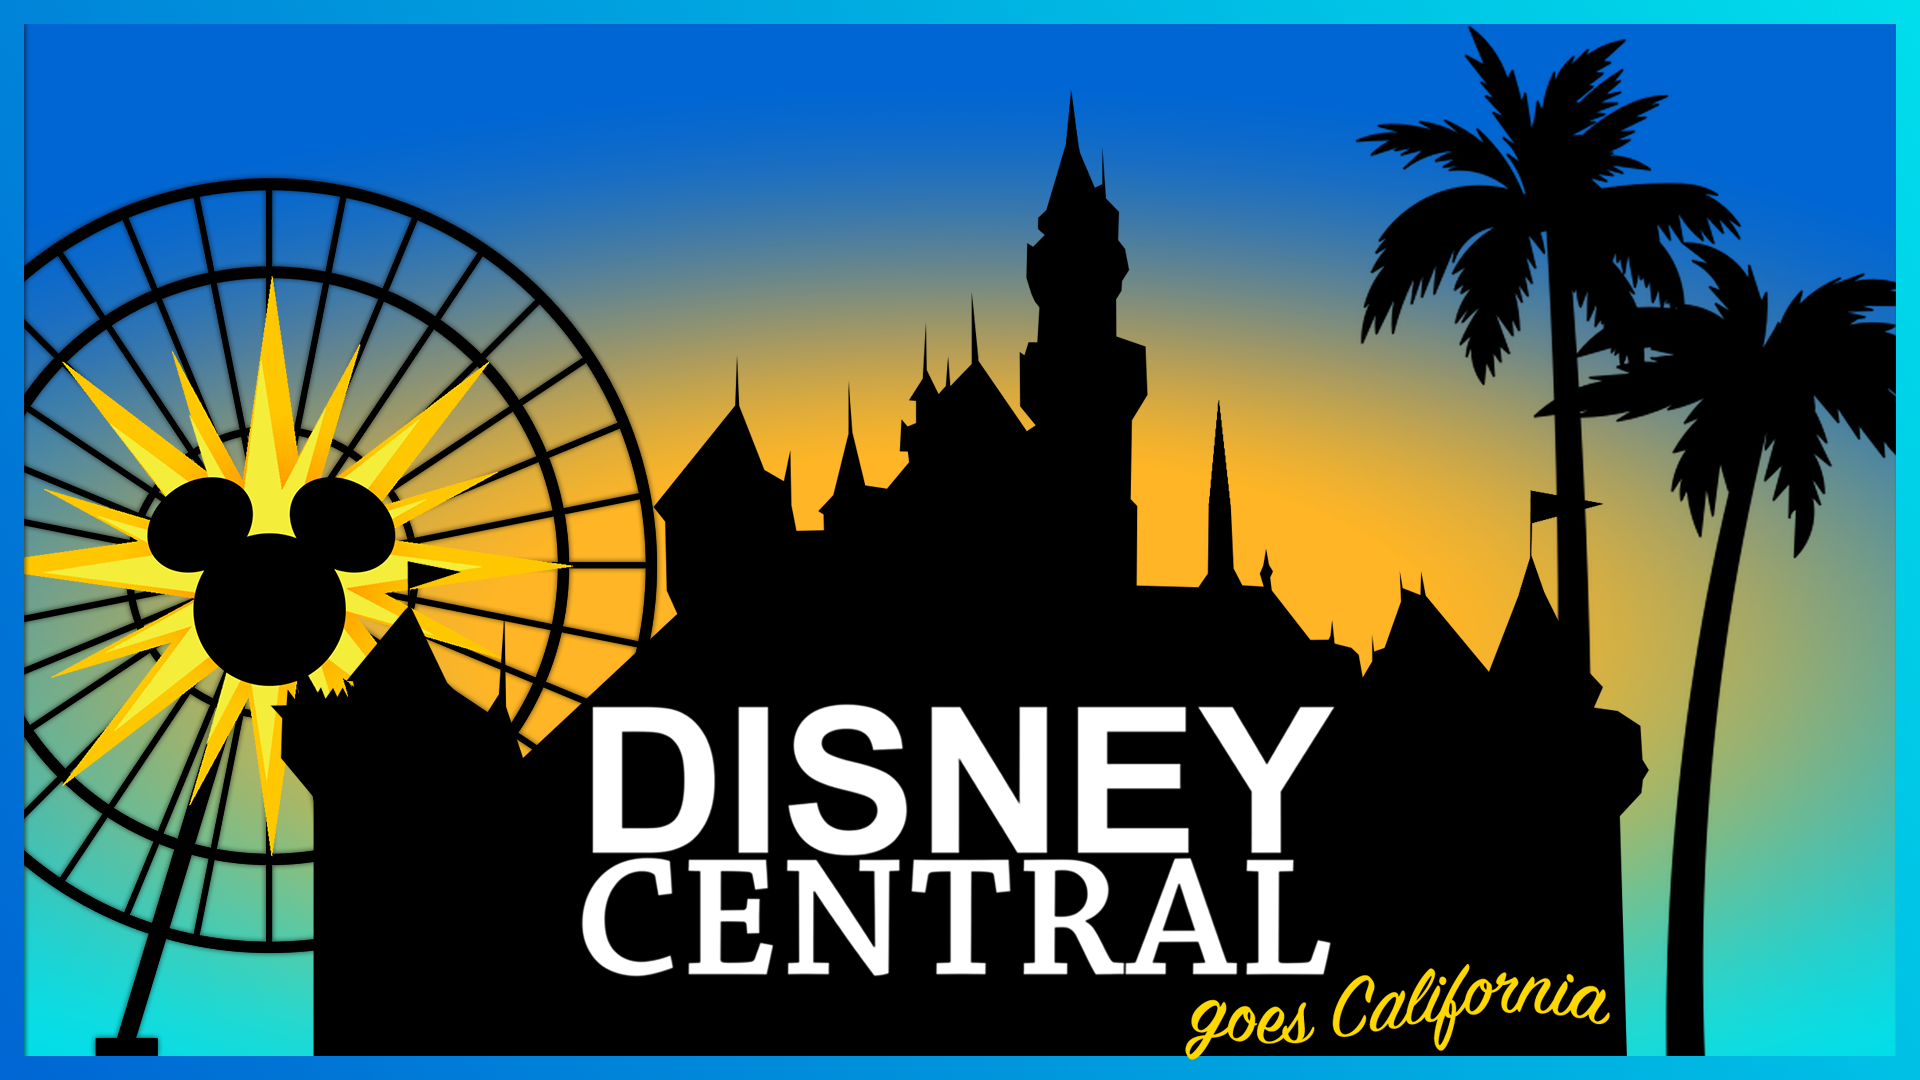 Disney Central goes California